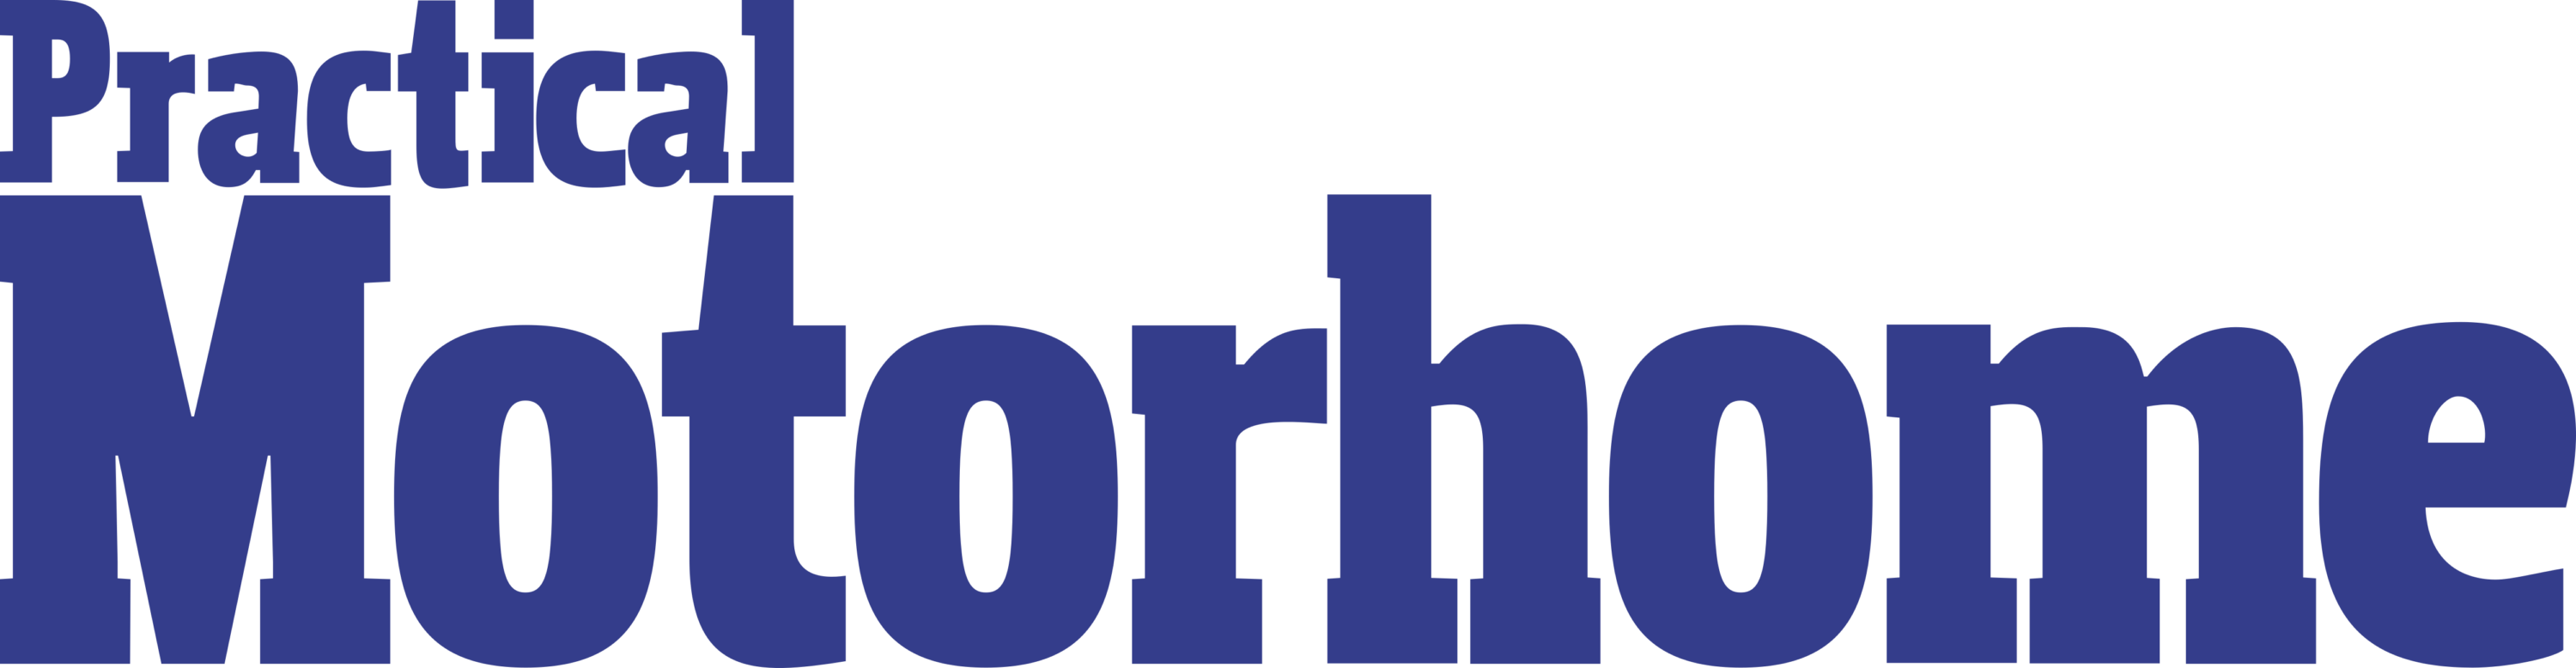 Practical Motorhome Logo